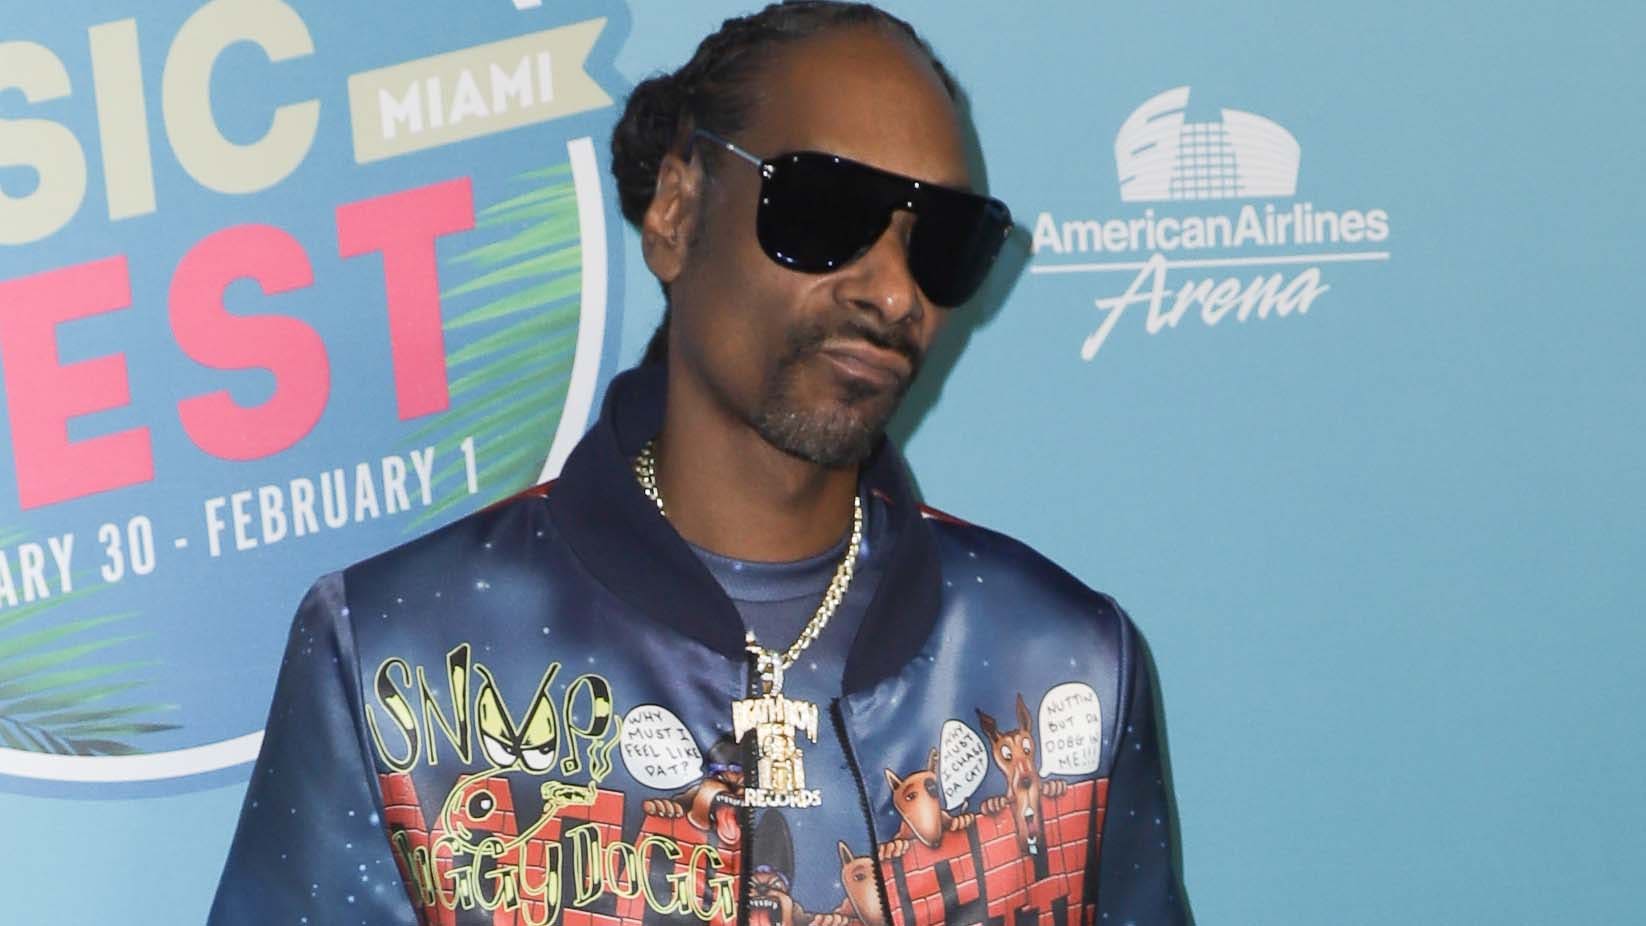 Snoop Dogg's latest song lyric implies he smoked pot with Barack Obama